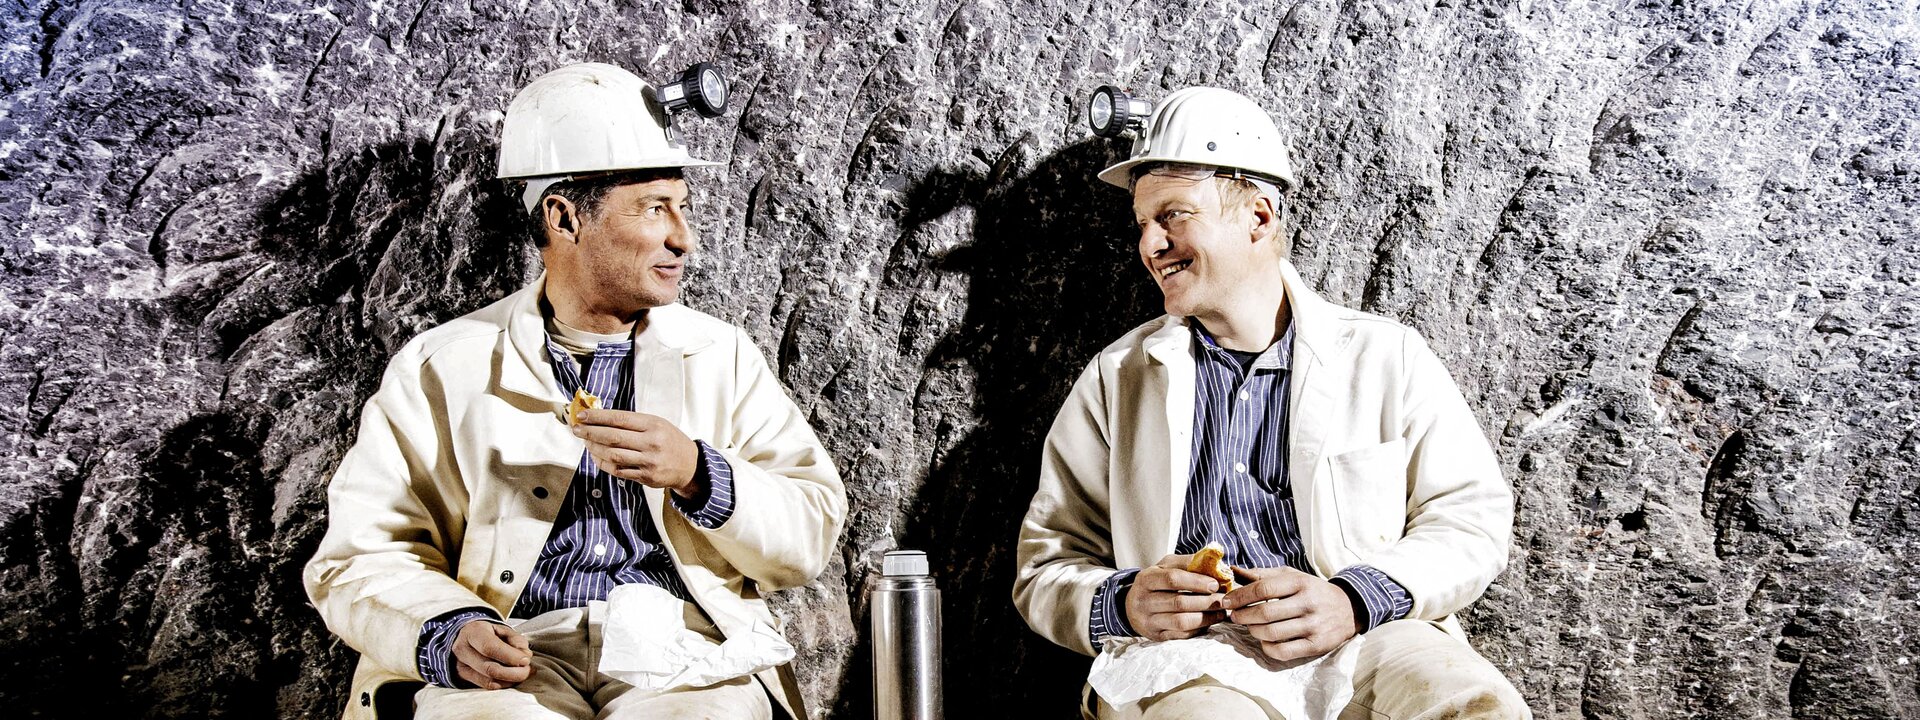 Miners having a snack underground